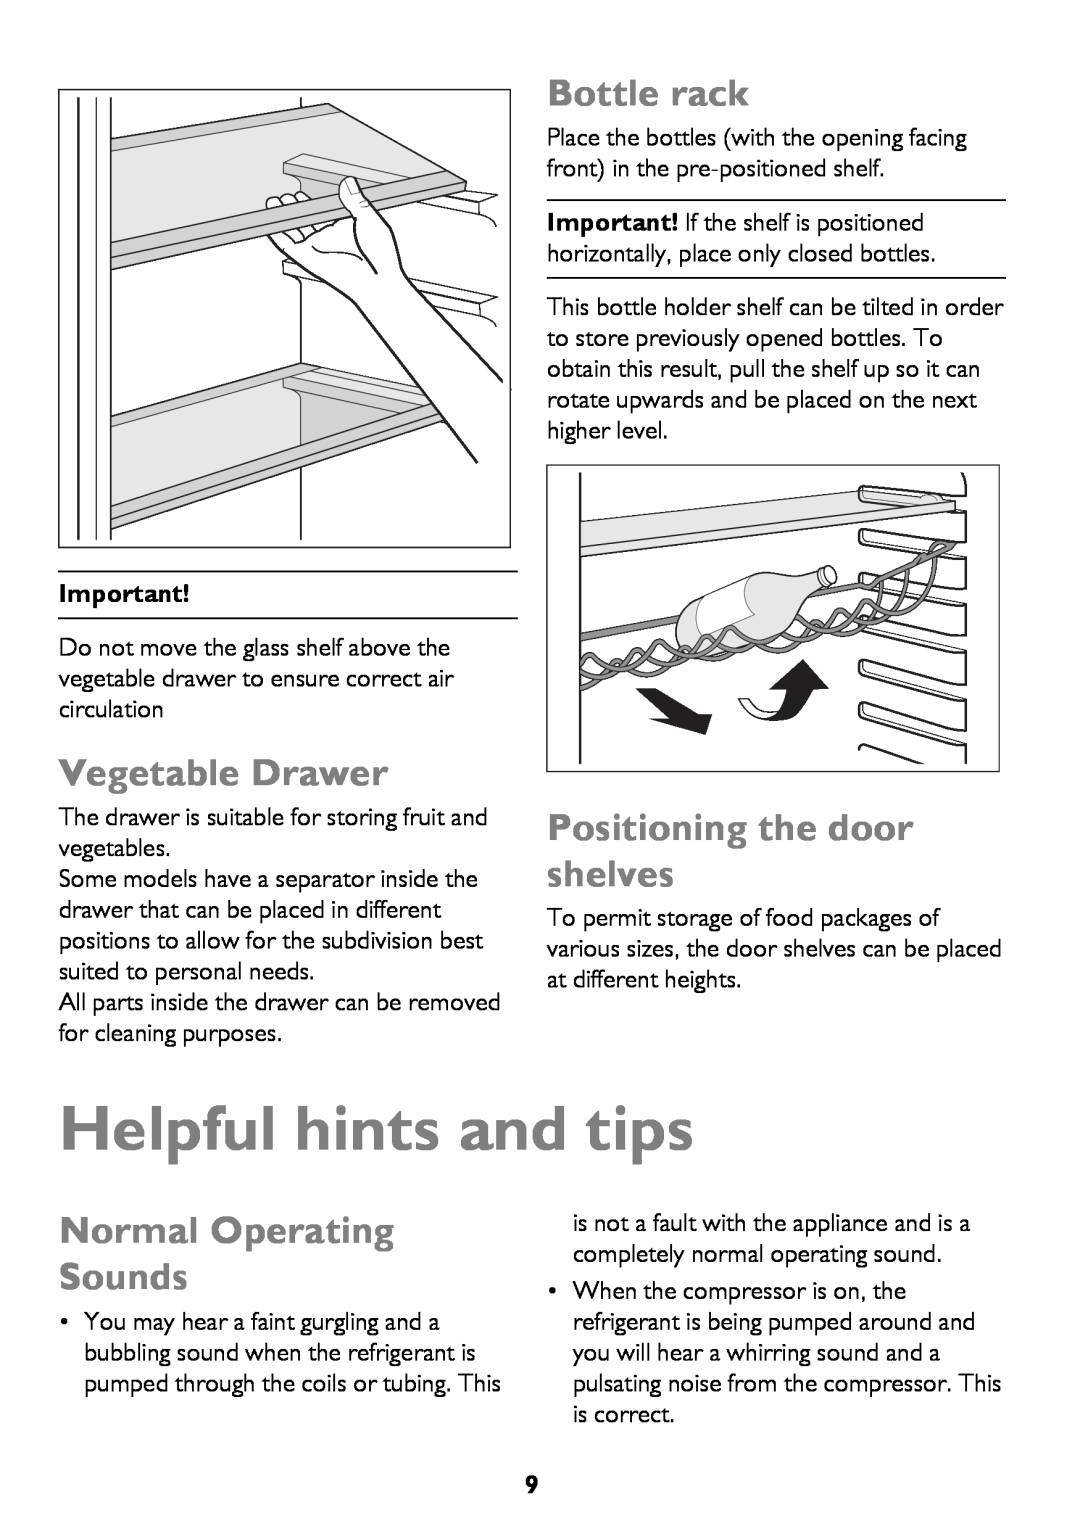 John Lewis JLLFW1602 instruction manual Helpful hints and tips, Vegetable Drawer, Bottle rack, Positioning the door shelves 